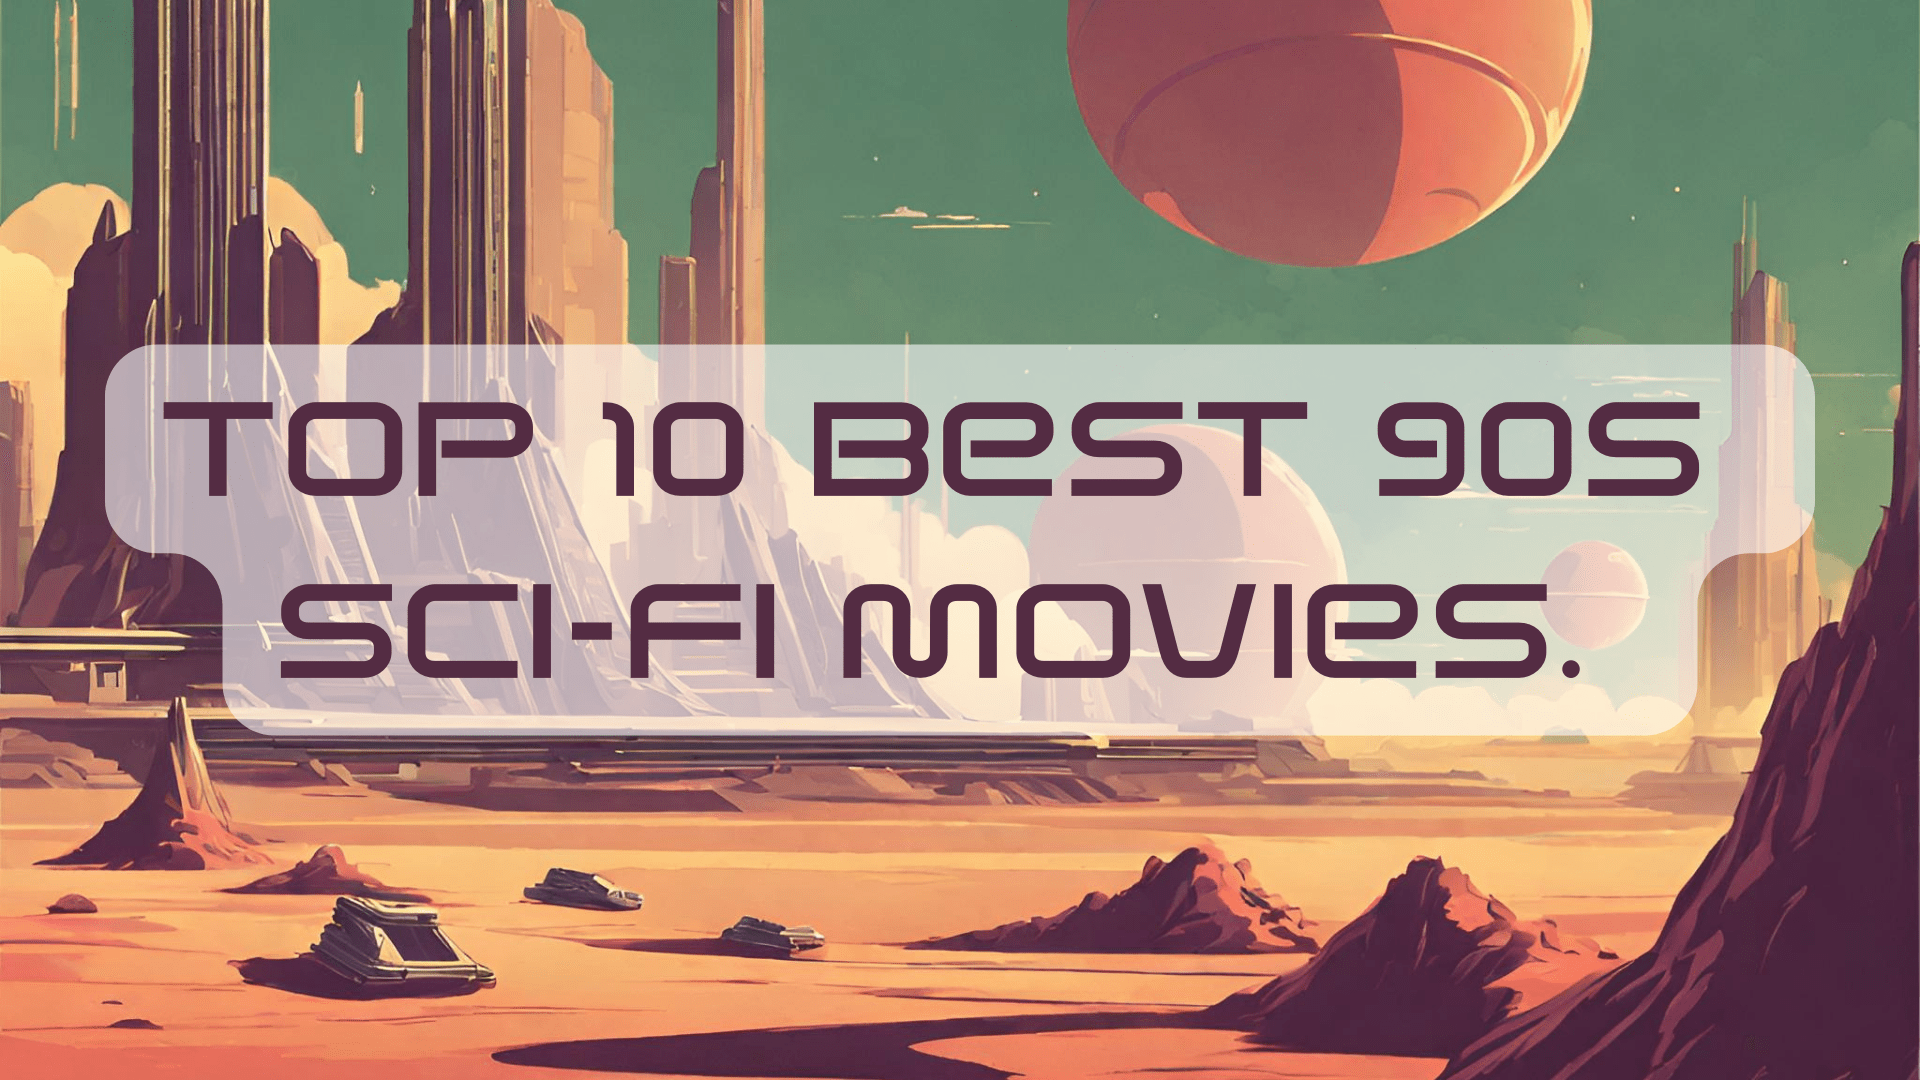 Top 10 Best 90s Sci-Fi Movies.